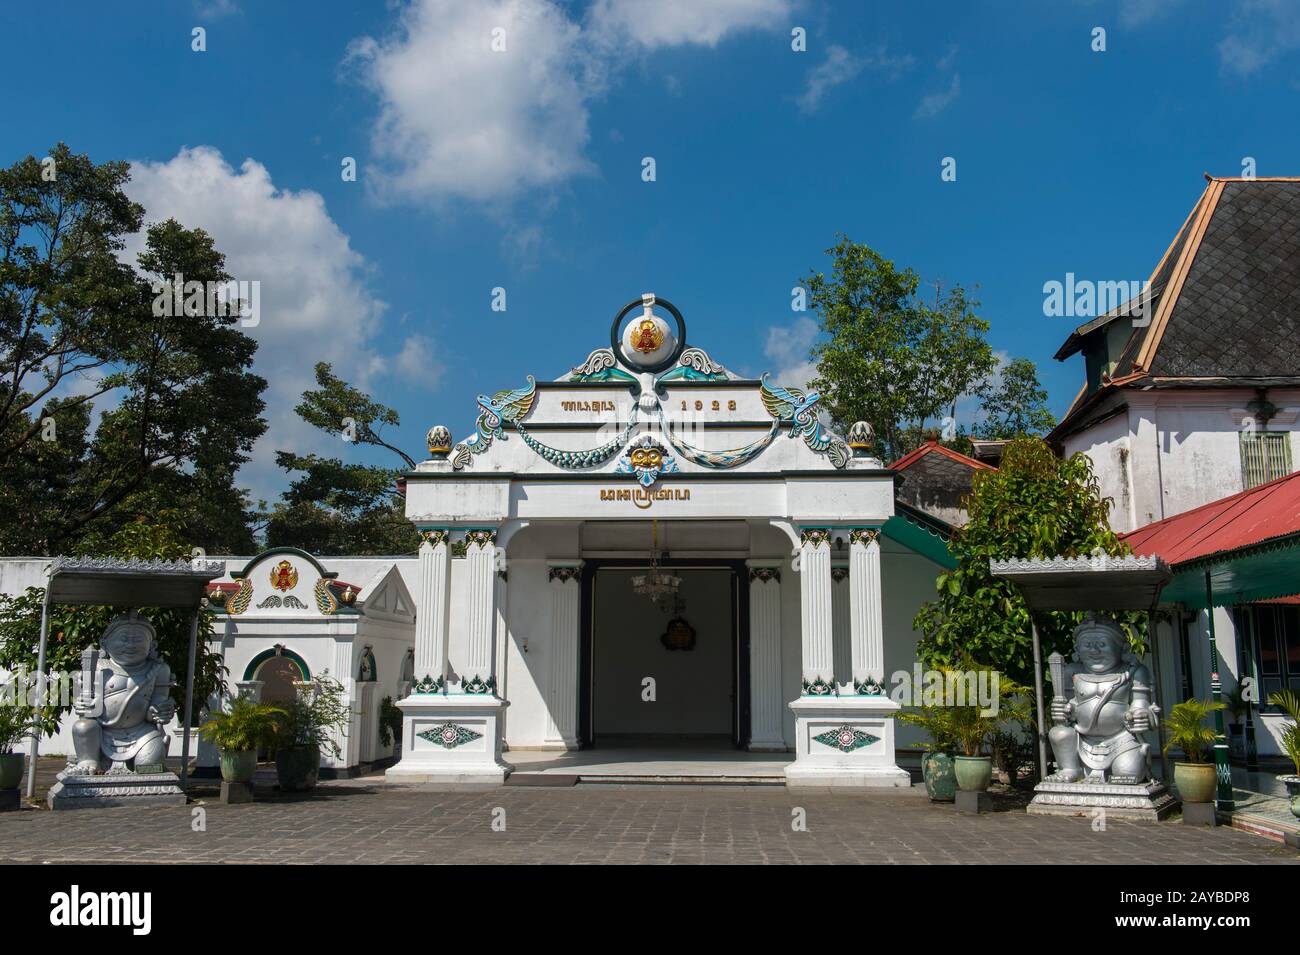 The Donopratono gate and guardian statues at the entrance to the Kraton of Yogyakarta (Keraton Ngayogyakarta Hadiningrat), the Sultans palace complex Stock Photo